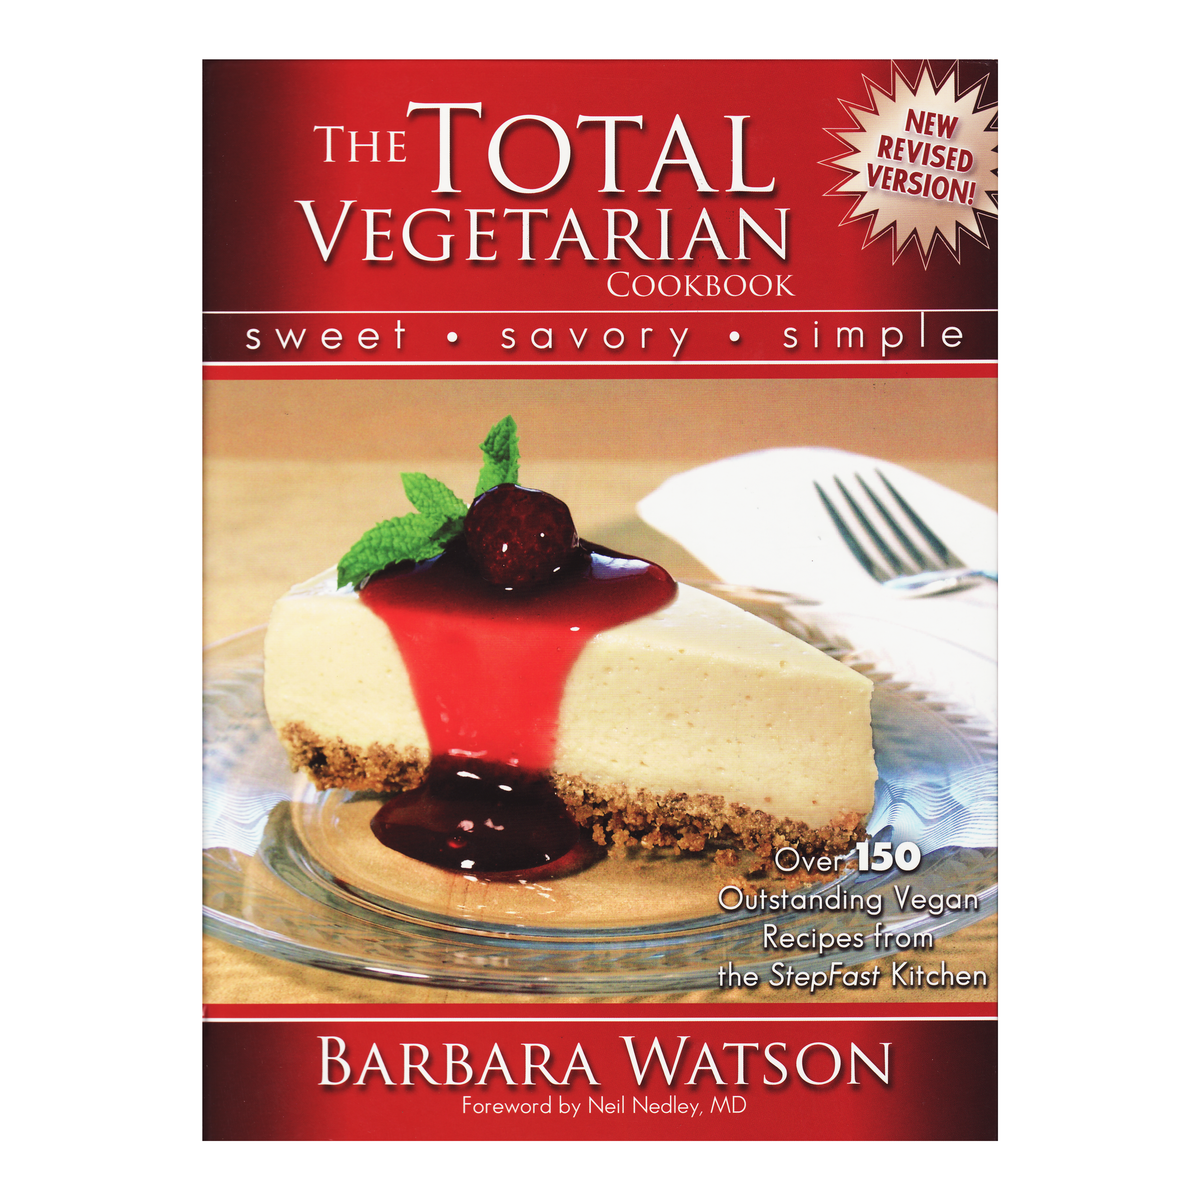 The Total Vegetarian Cookbook: Sweet - Savory - Simple Book (Paperback) by Barbara Watson